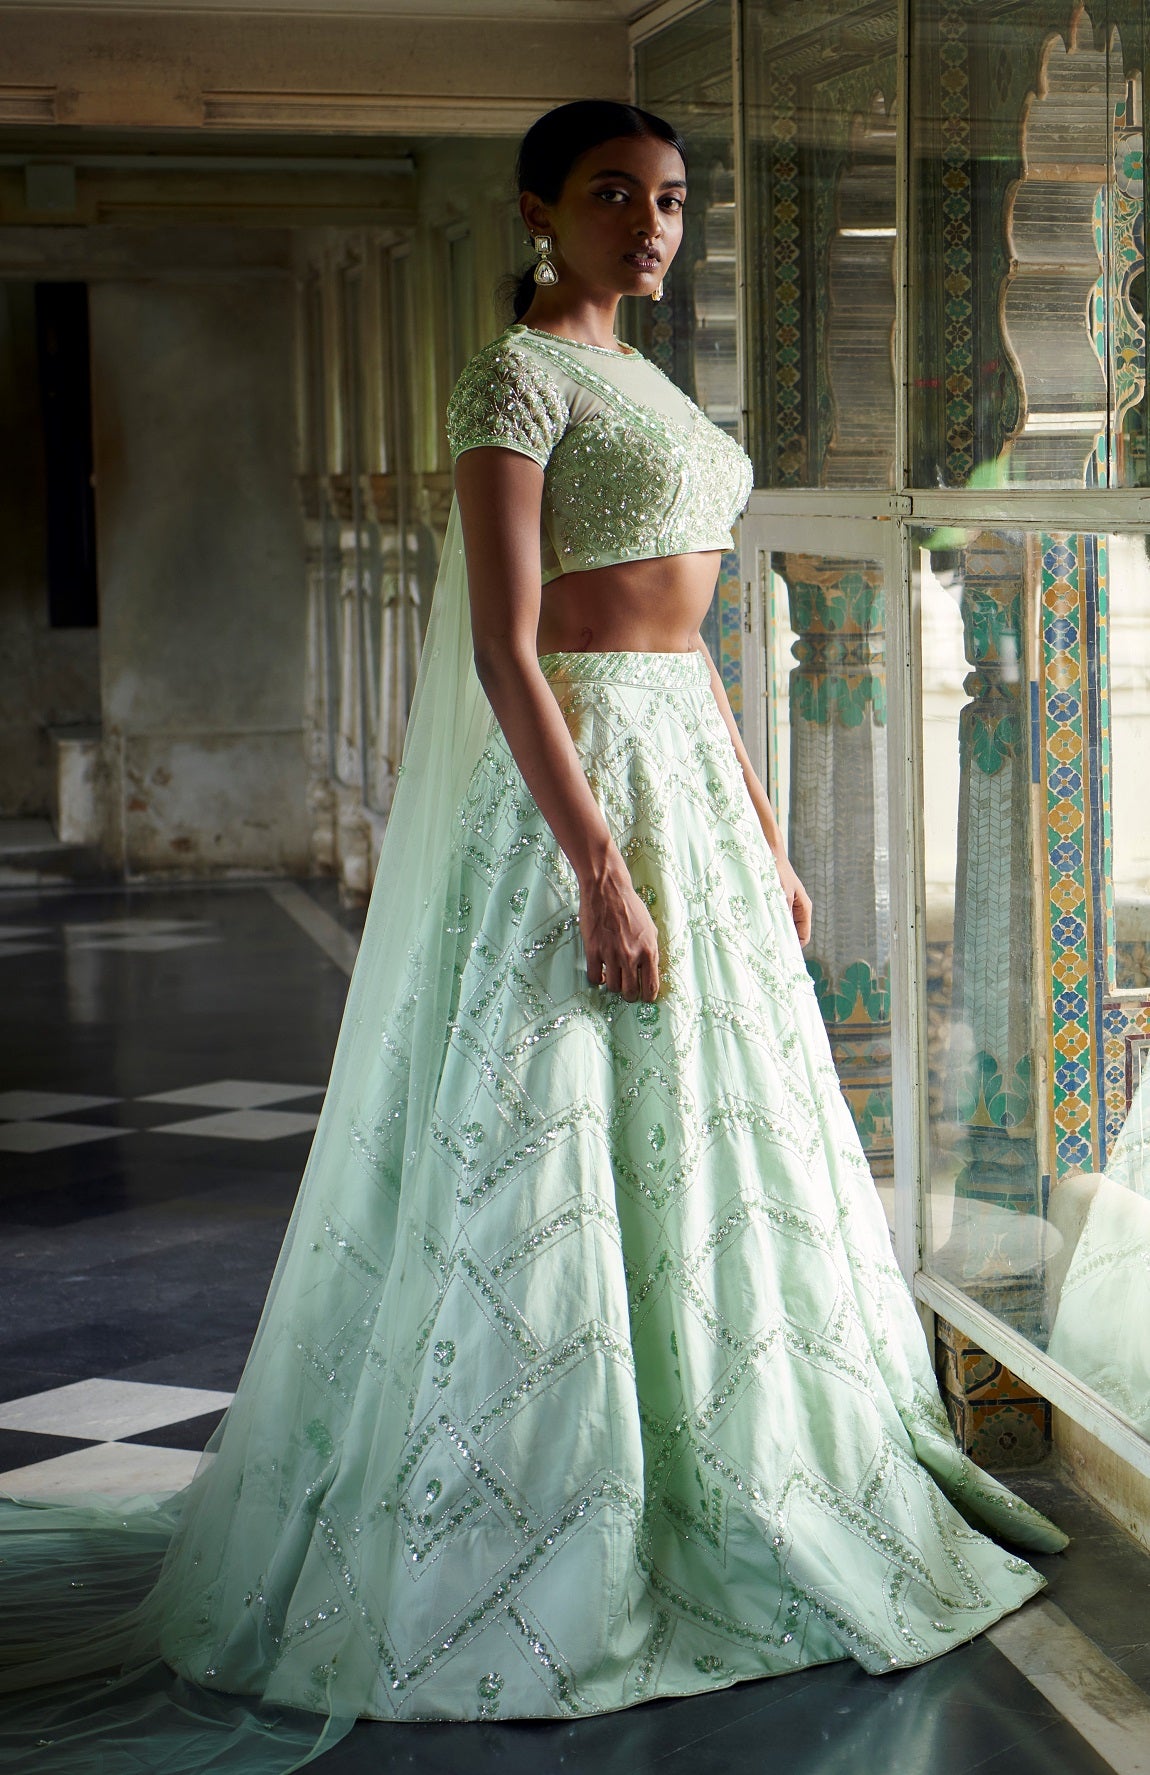 Elegance and tradition wrapped in one stunning lehenga. #IndianBridalLehenga